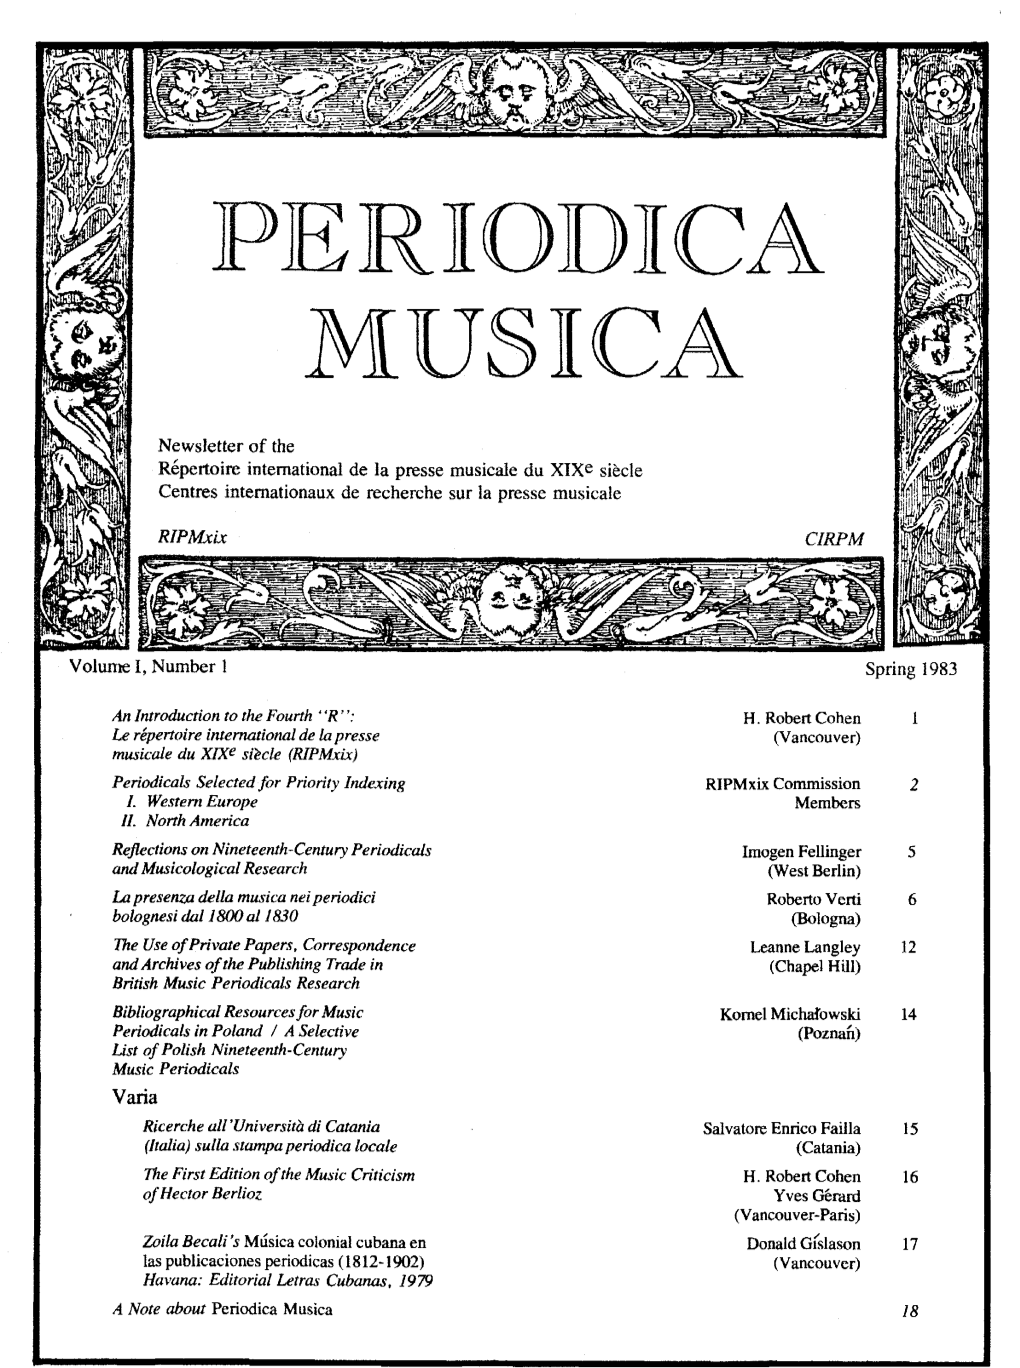 Periodica Musica 18 I PERIODICA MUSICA ——